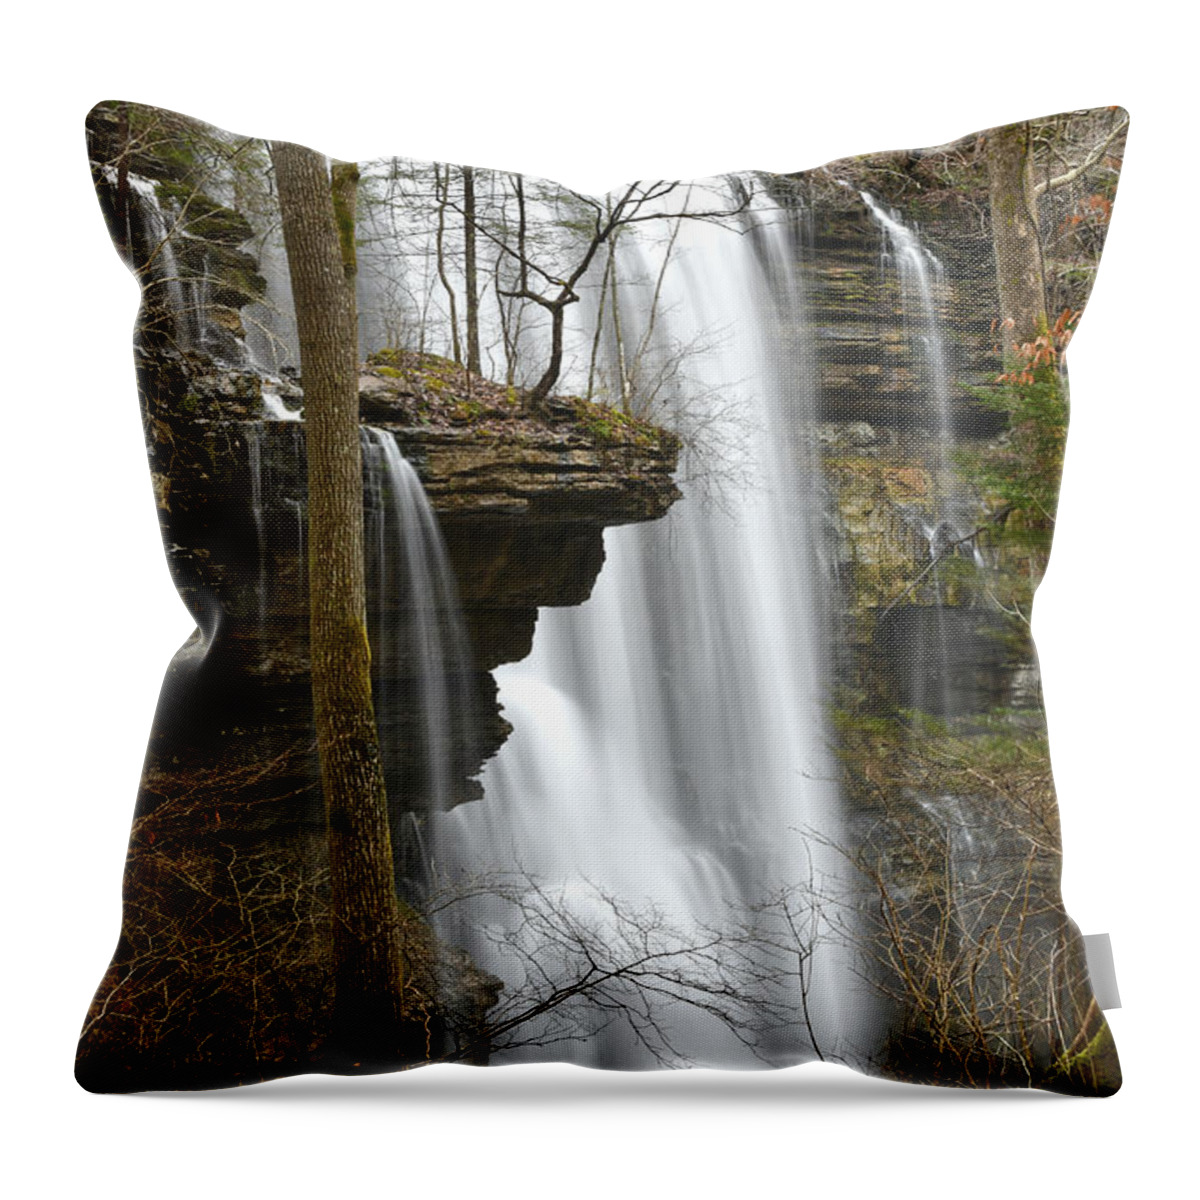 Virgin Falls Throw Pillow featuring the photograph Virgin Falls 2 by Phil Perkins